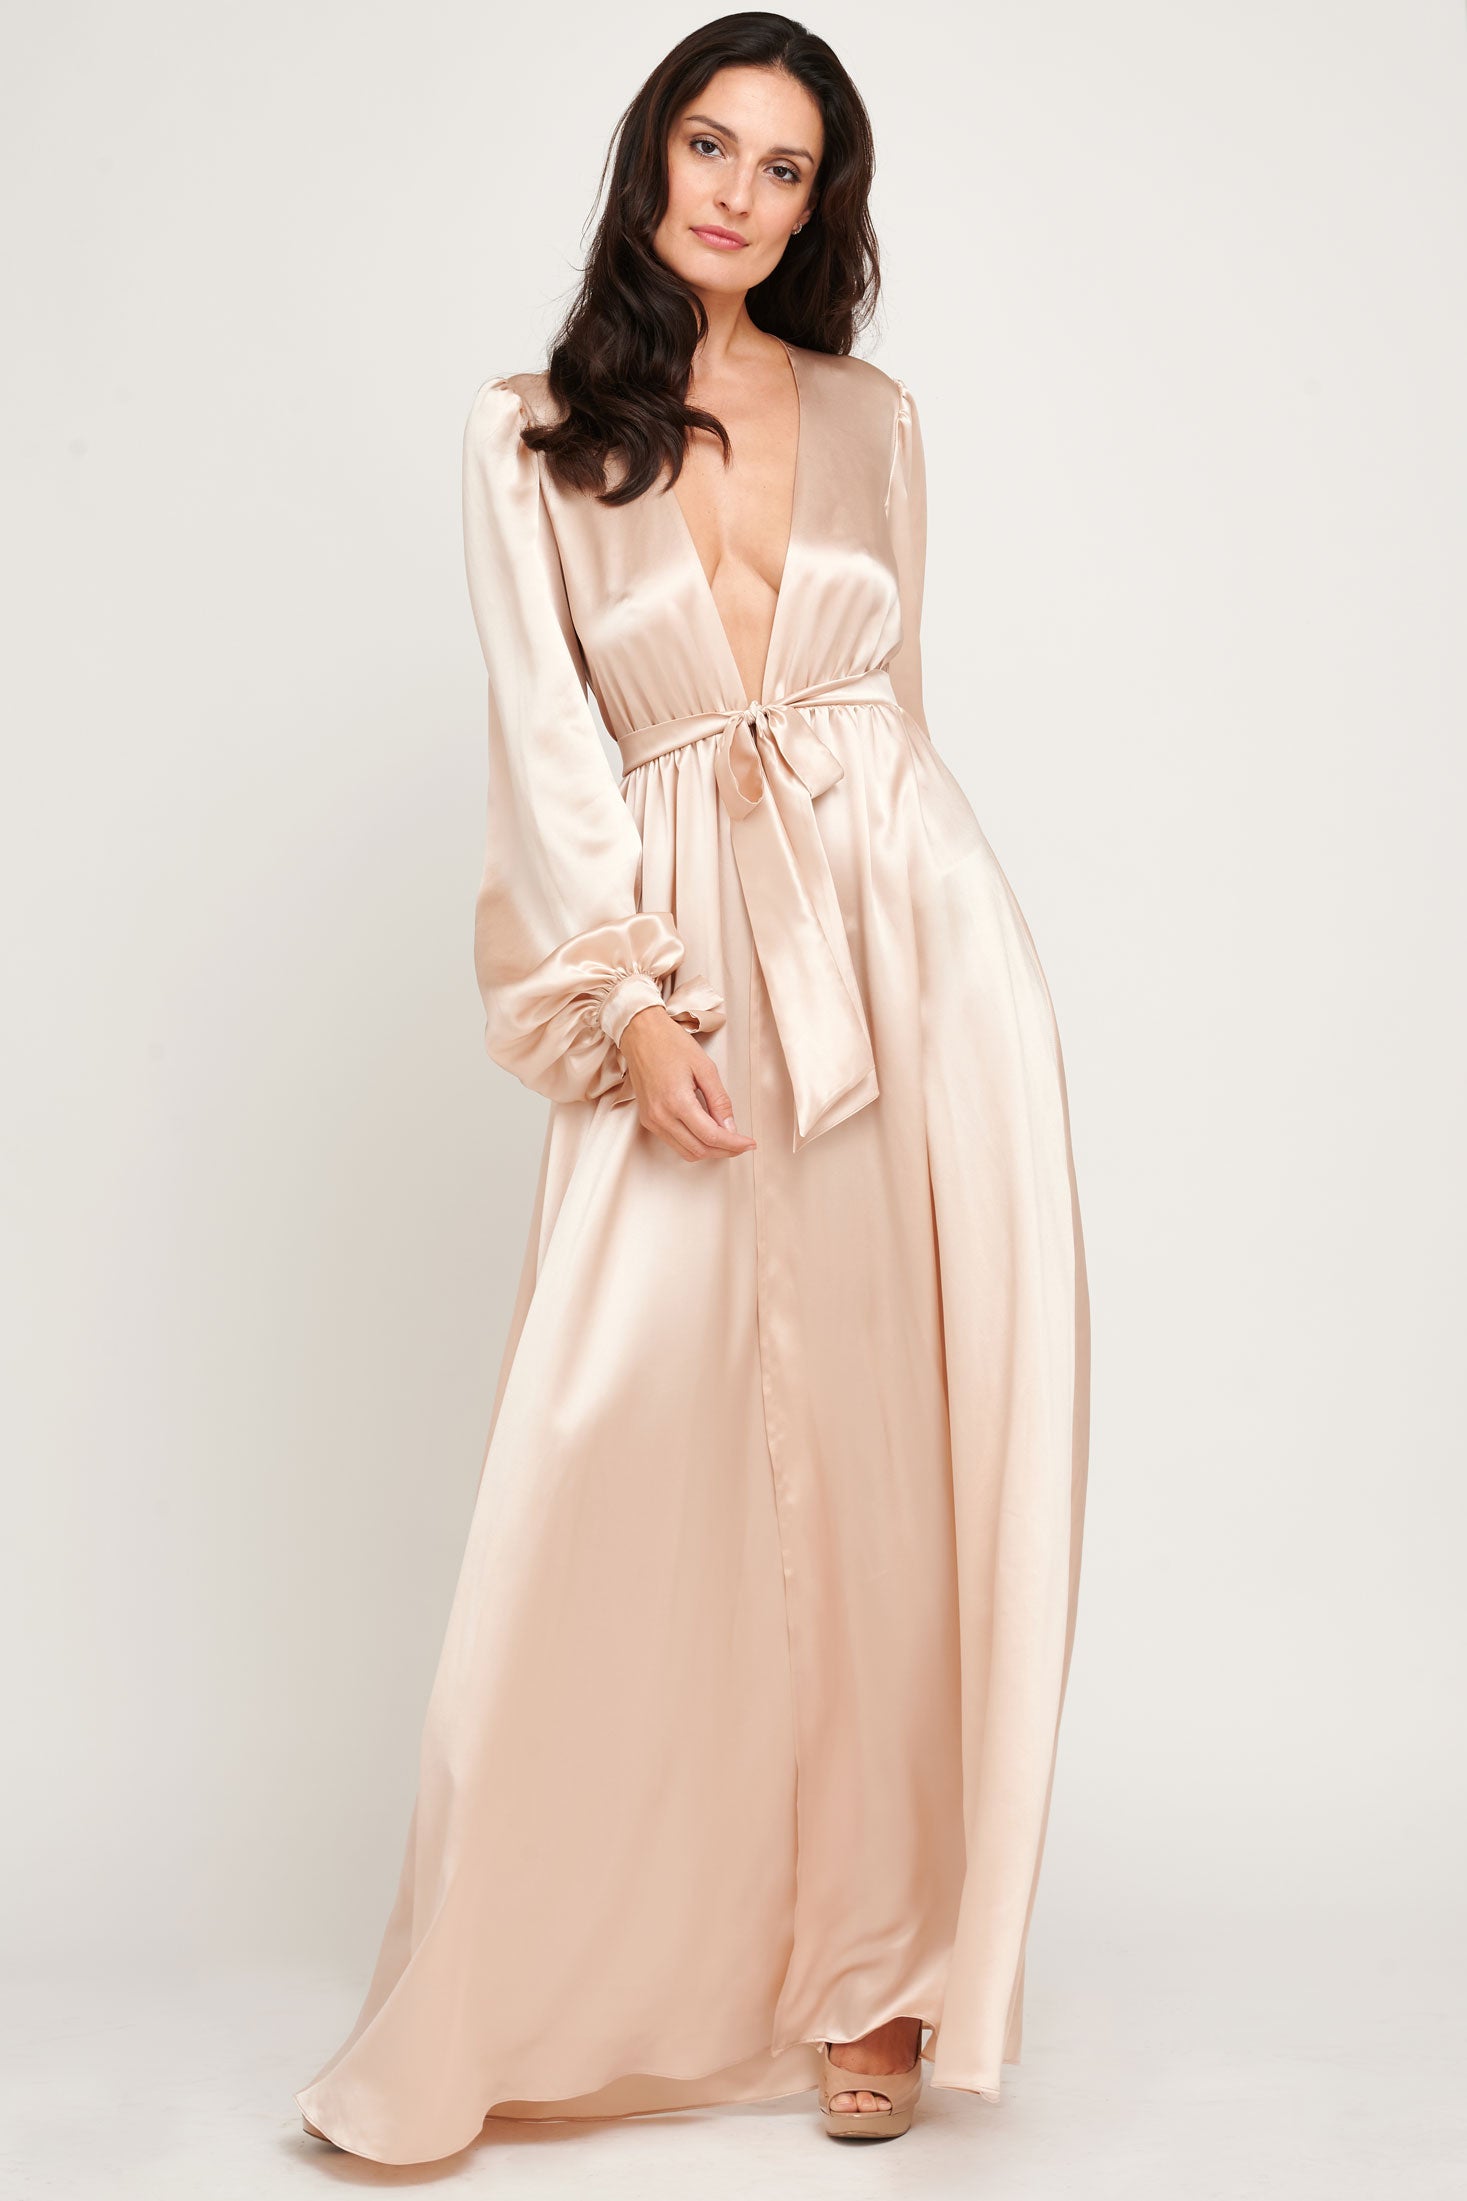 Designer Dressing Gowns & Robes for Women